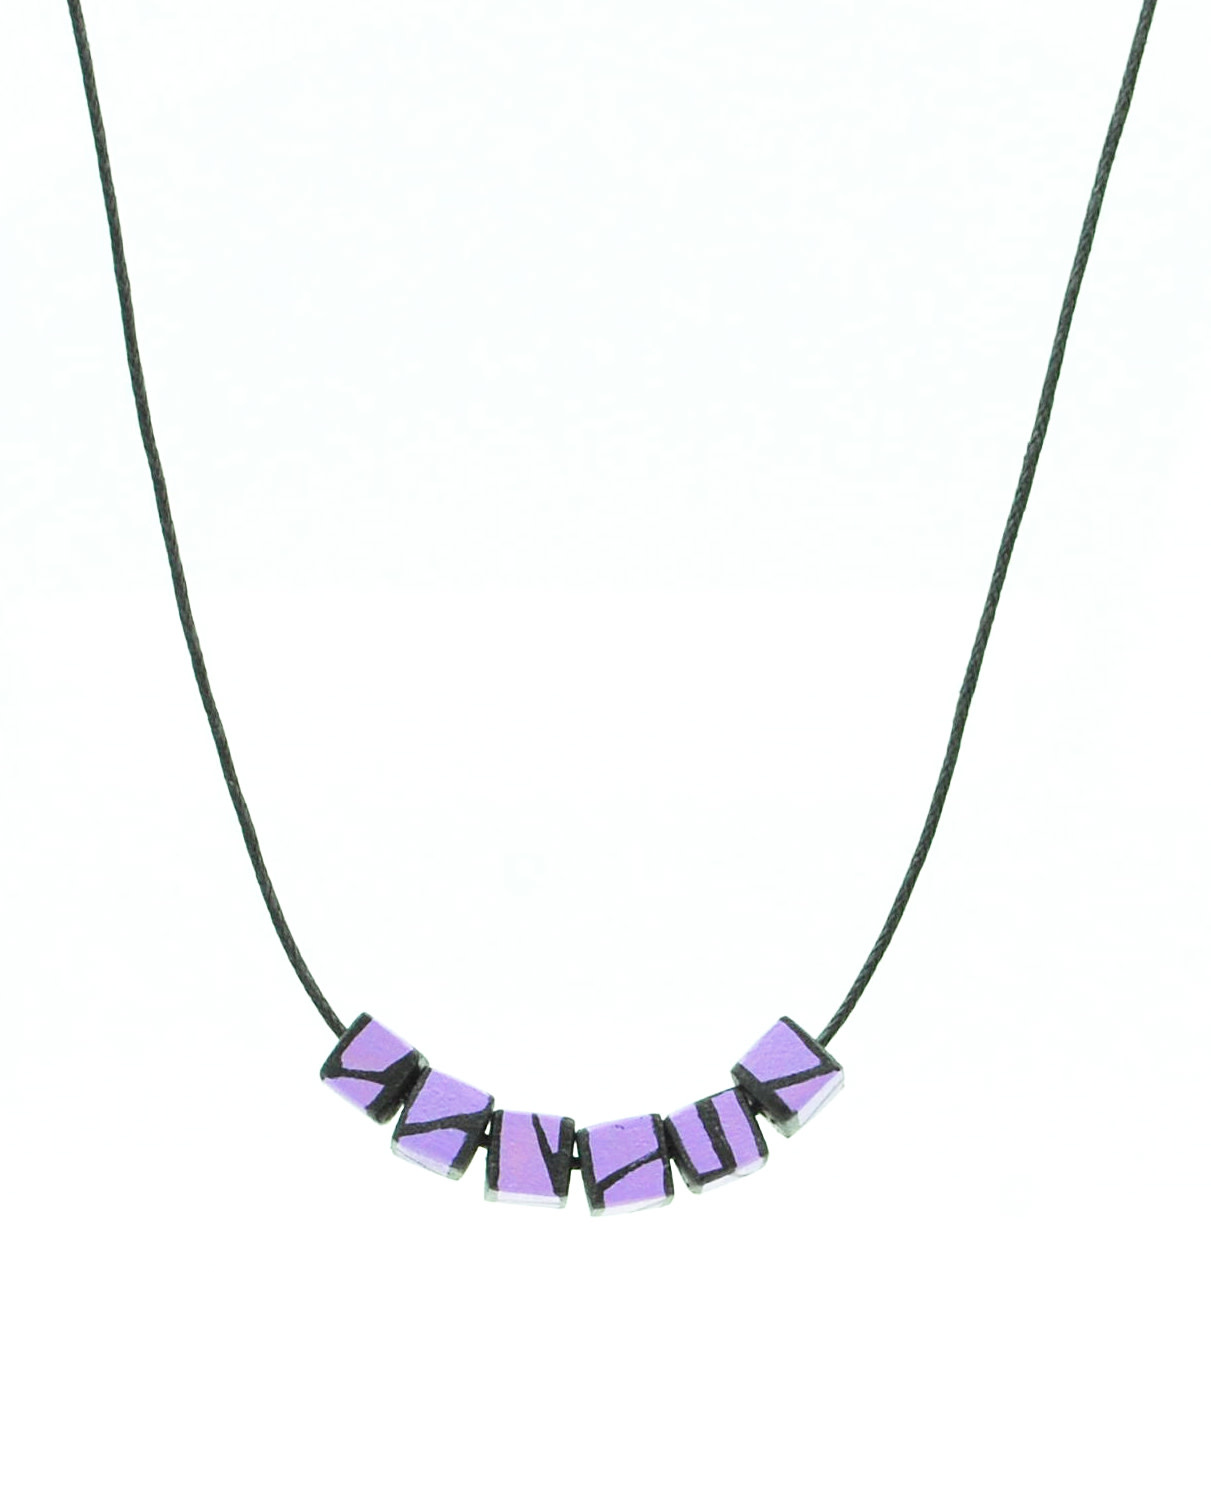 Hue+Wood Jewelry Minimal Purple Cube Necklace